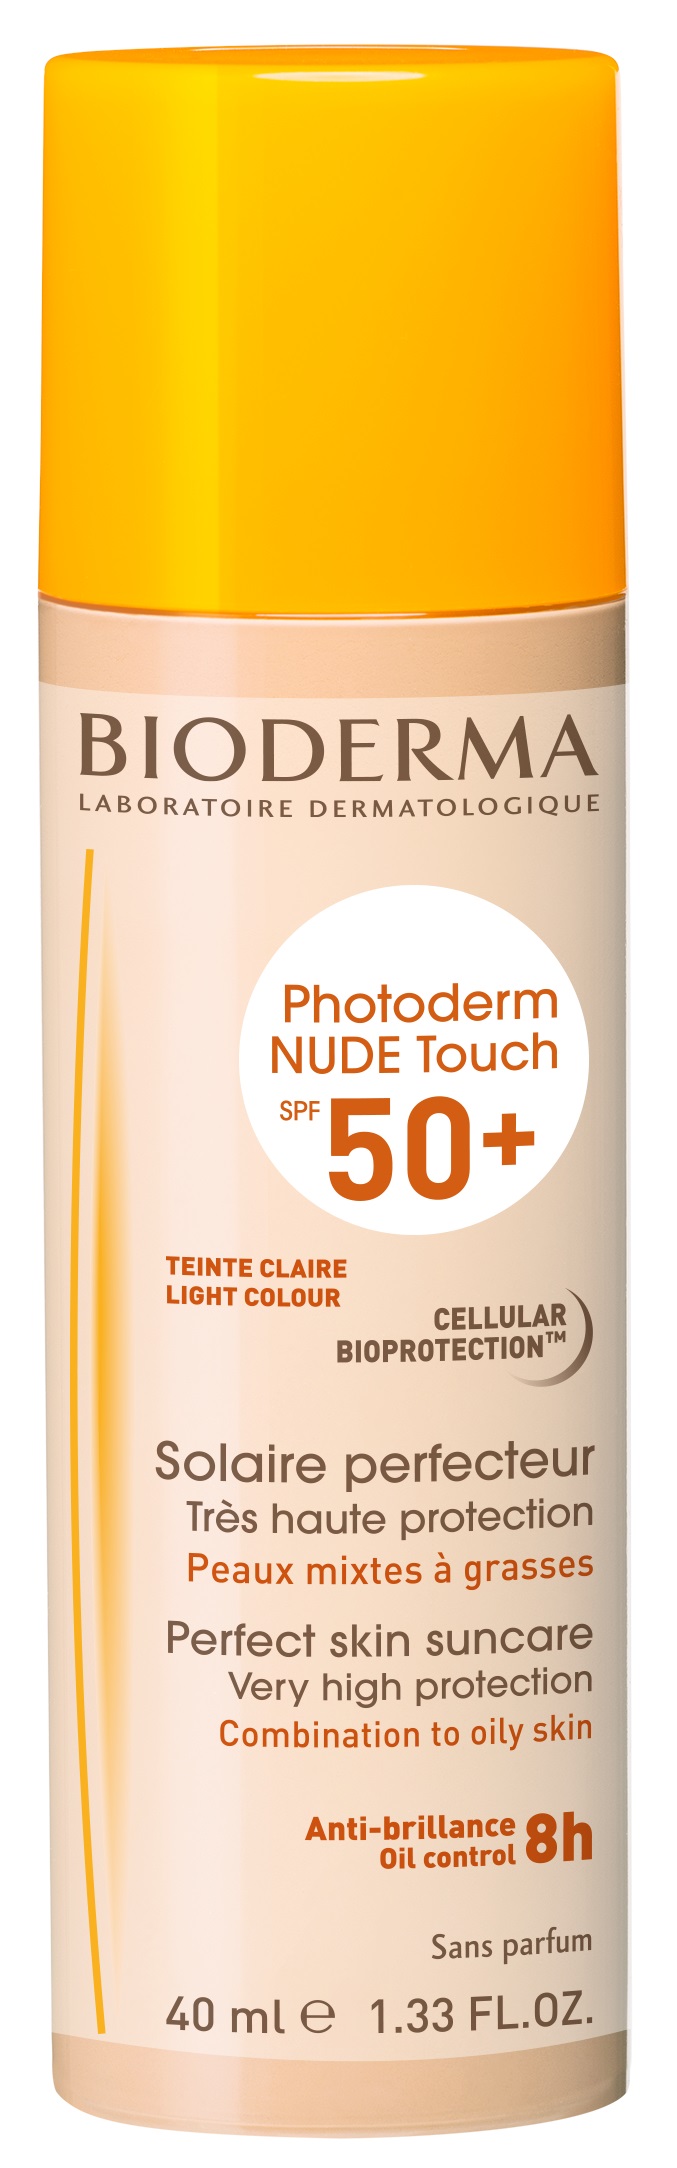 BIODERMA PHOTODERM NUDE TOUCH SPF50+ NUANTA DESCHISA 40ML Bioderma